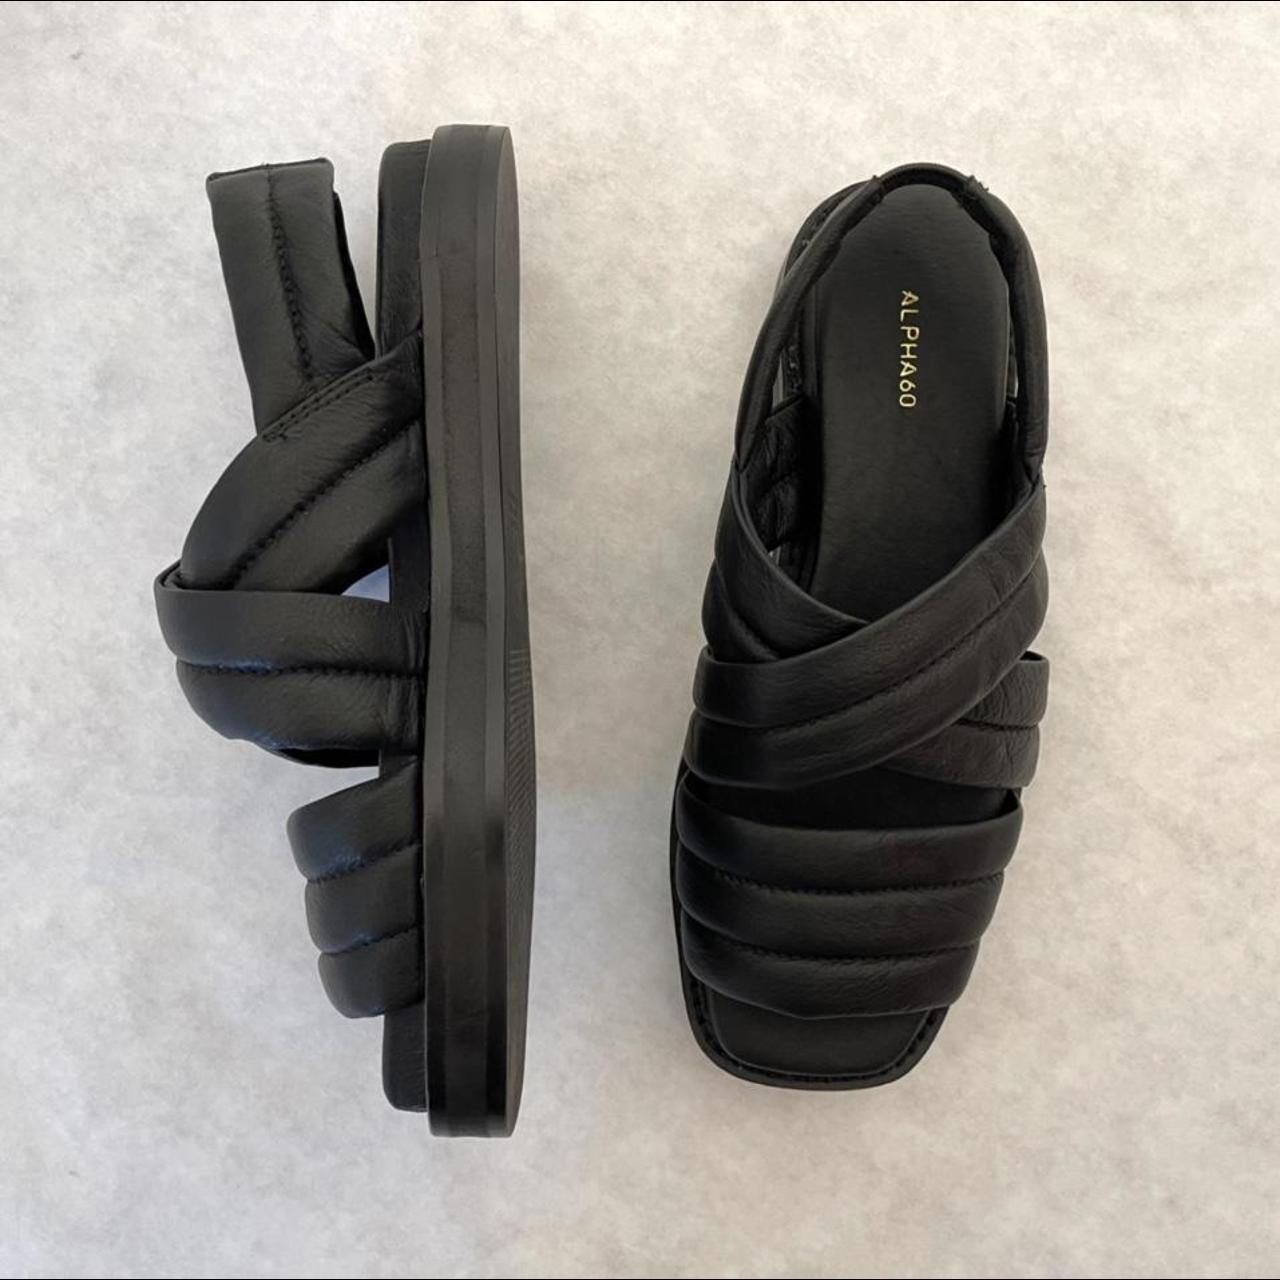 Product Image 2 - ALPHA60 Black leather sandals (Brand